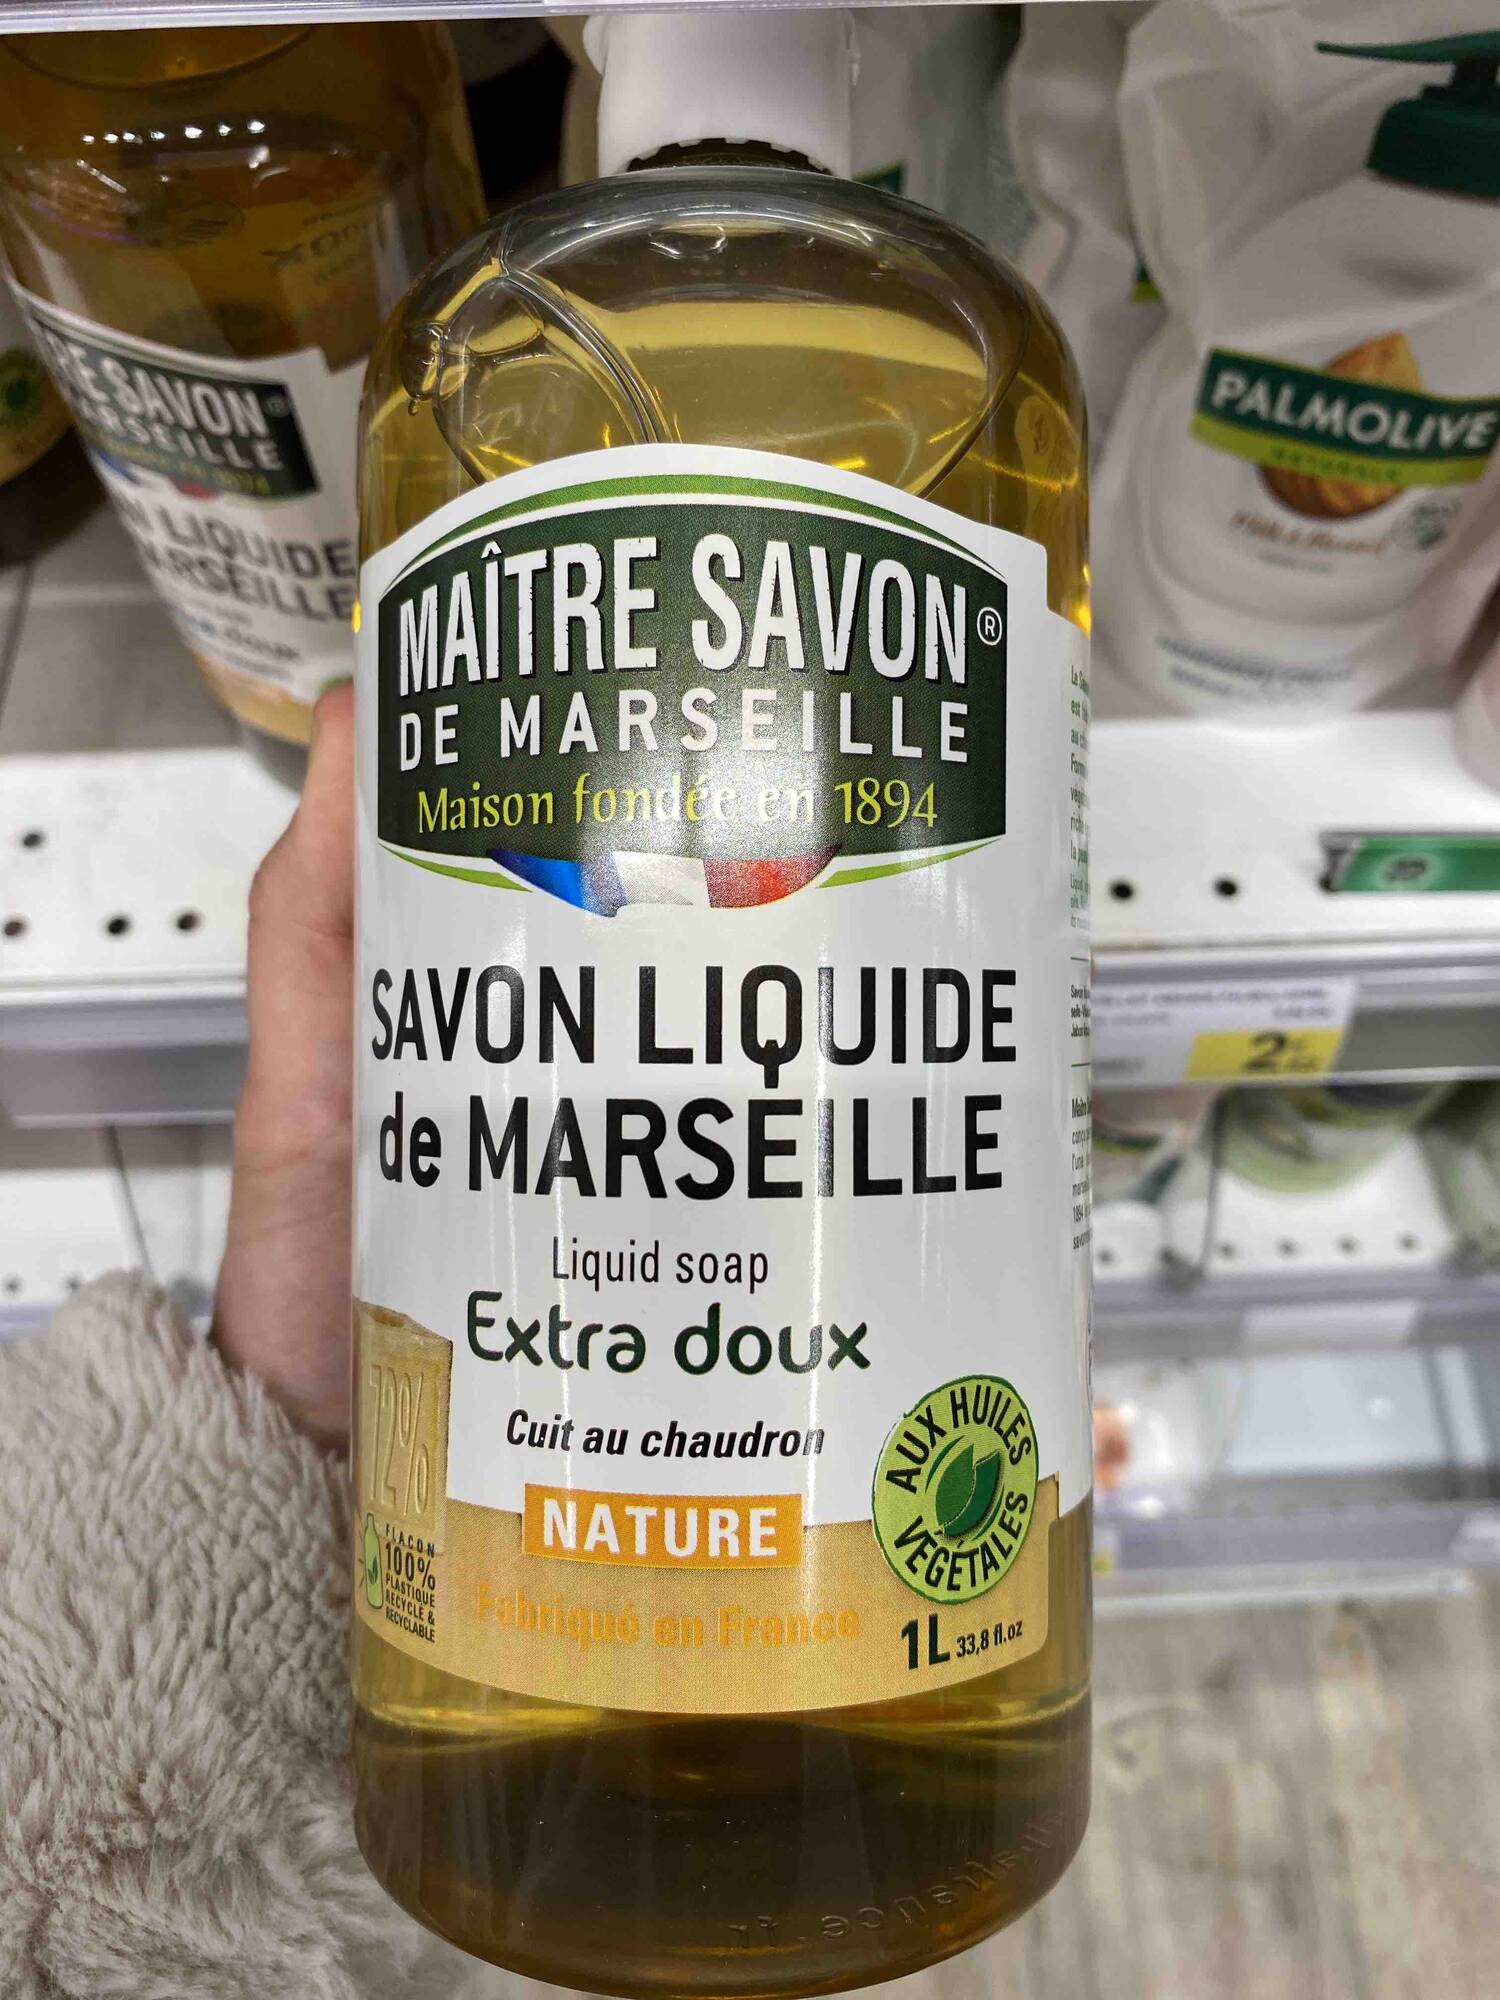 MAÎTRE SAVON DE MARSEILLE - Extra doux - Savon liquide de Marseille